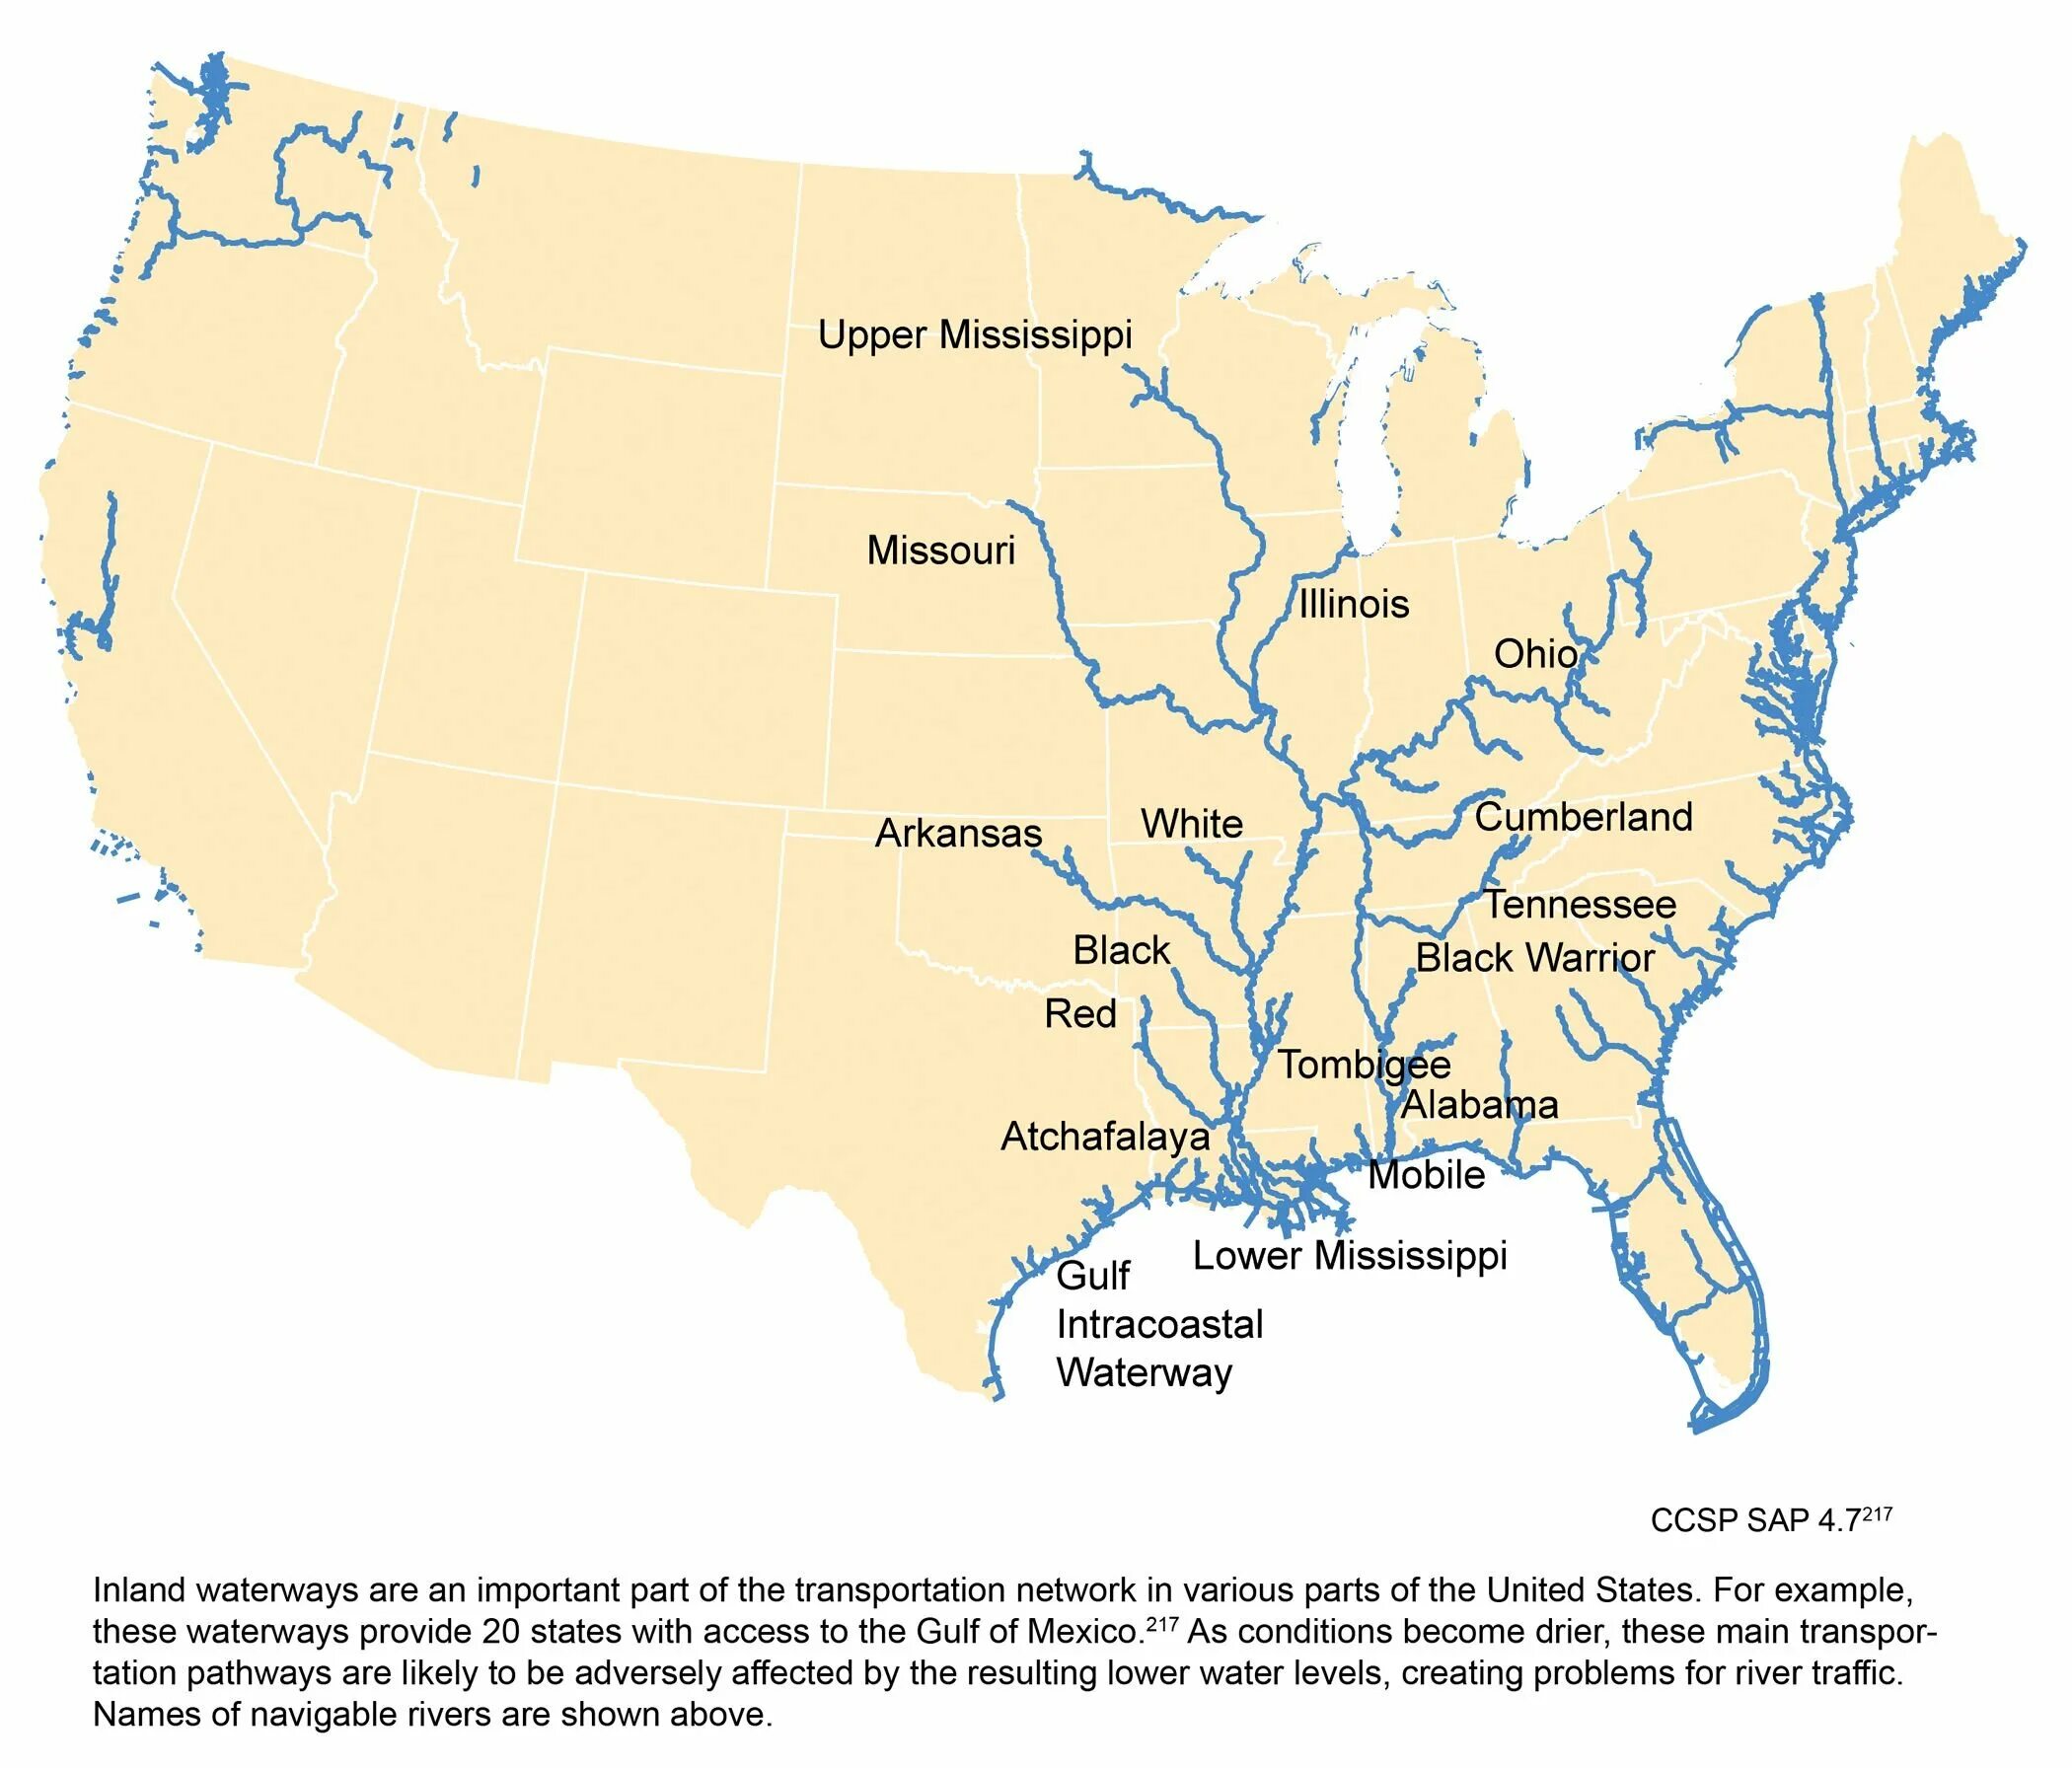 Река огайо бассейн какого океана. Река Миссисипи на карте США. Реки Миссисипи и Миссури на карте Америки. Река Миссисипи на карте Северной Америки. Река Миссисипи и Миссури на карте.